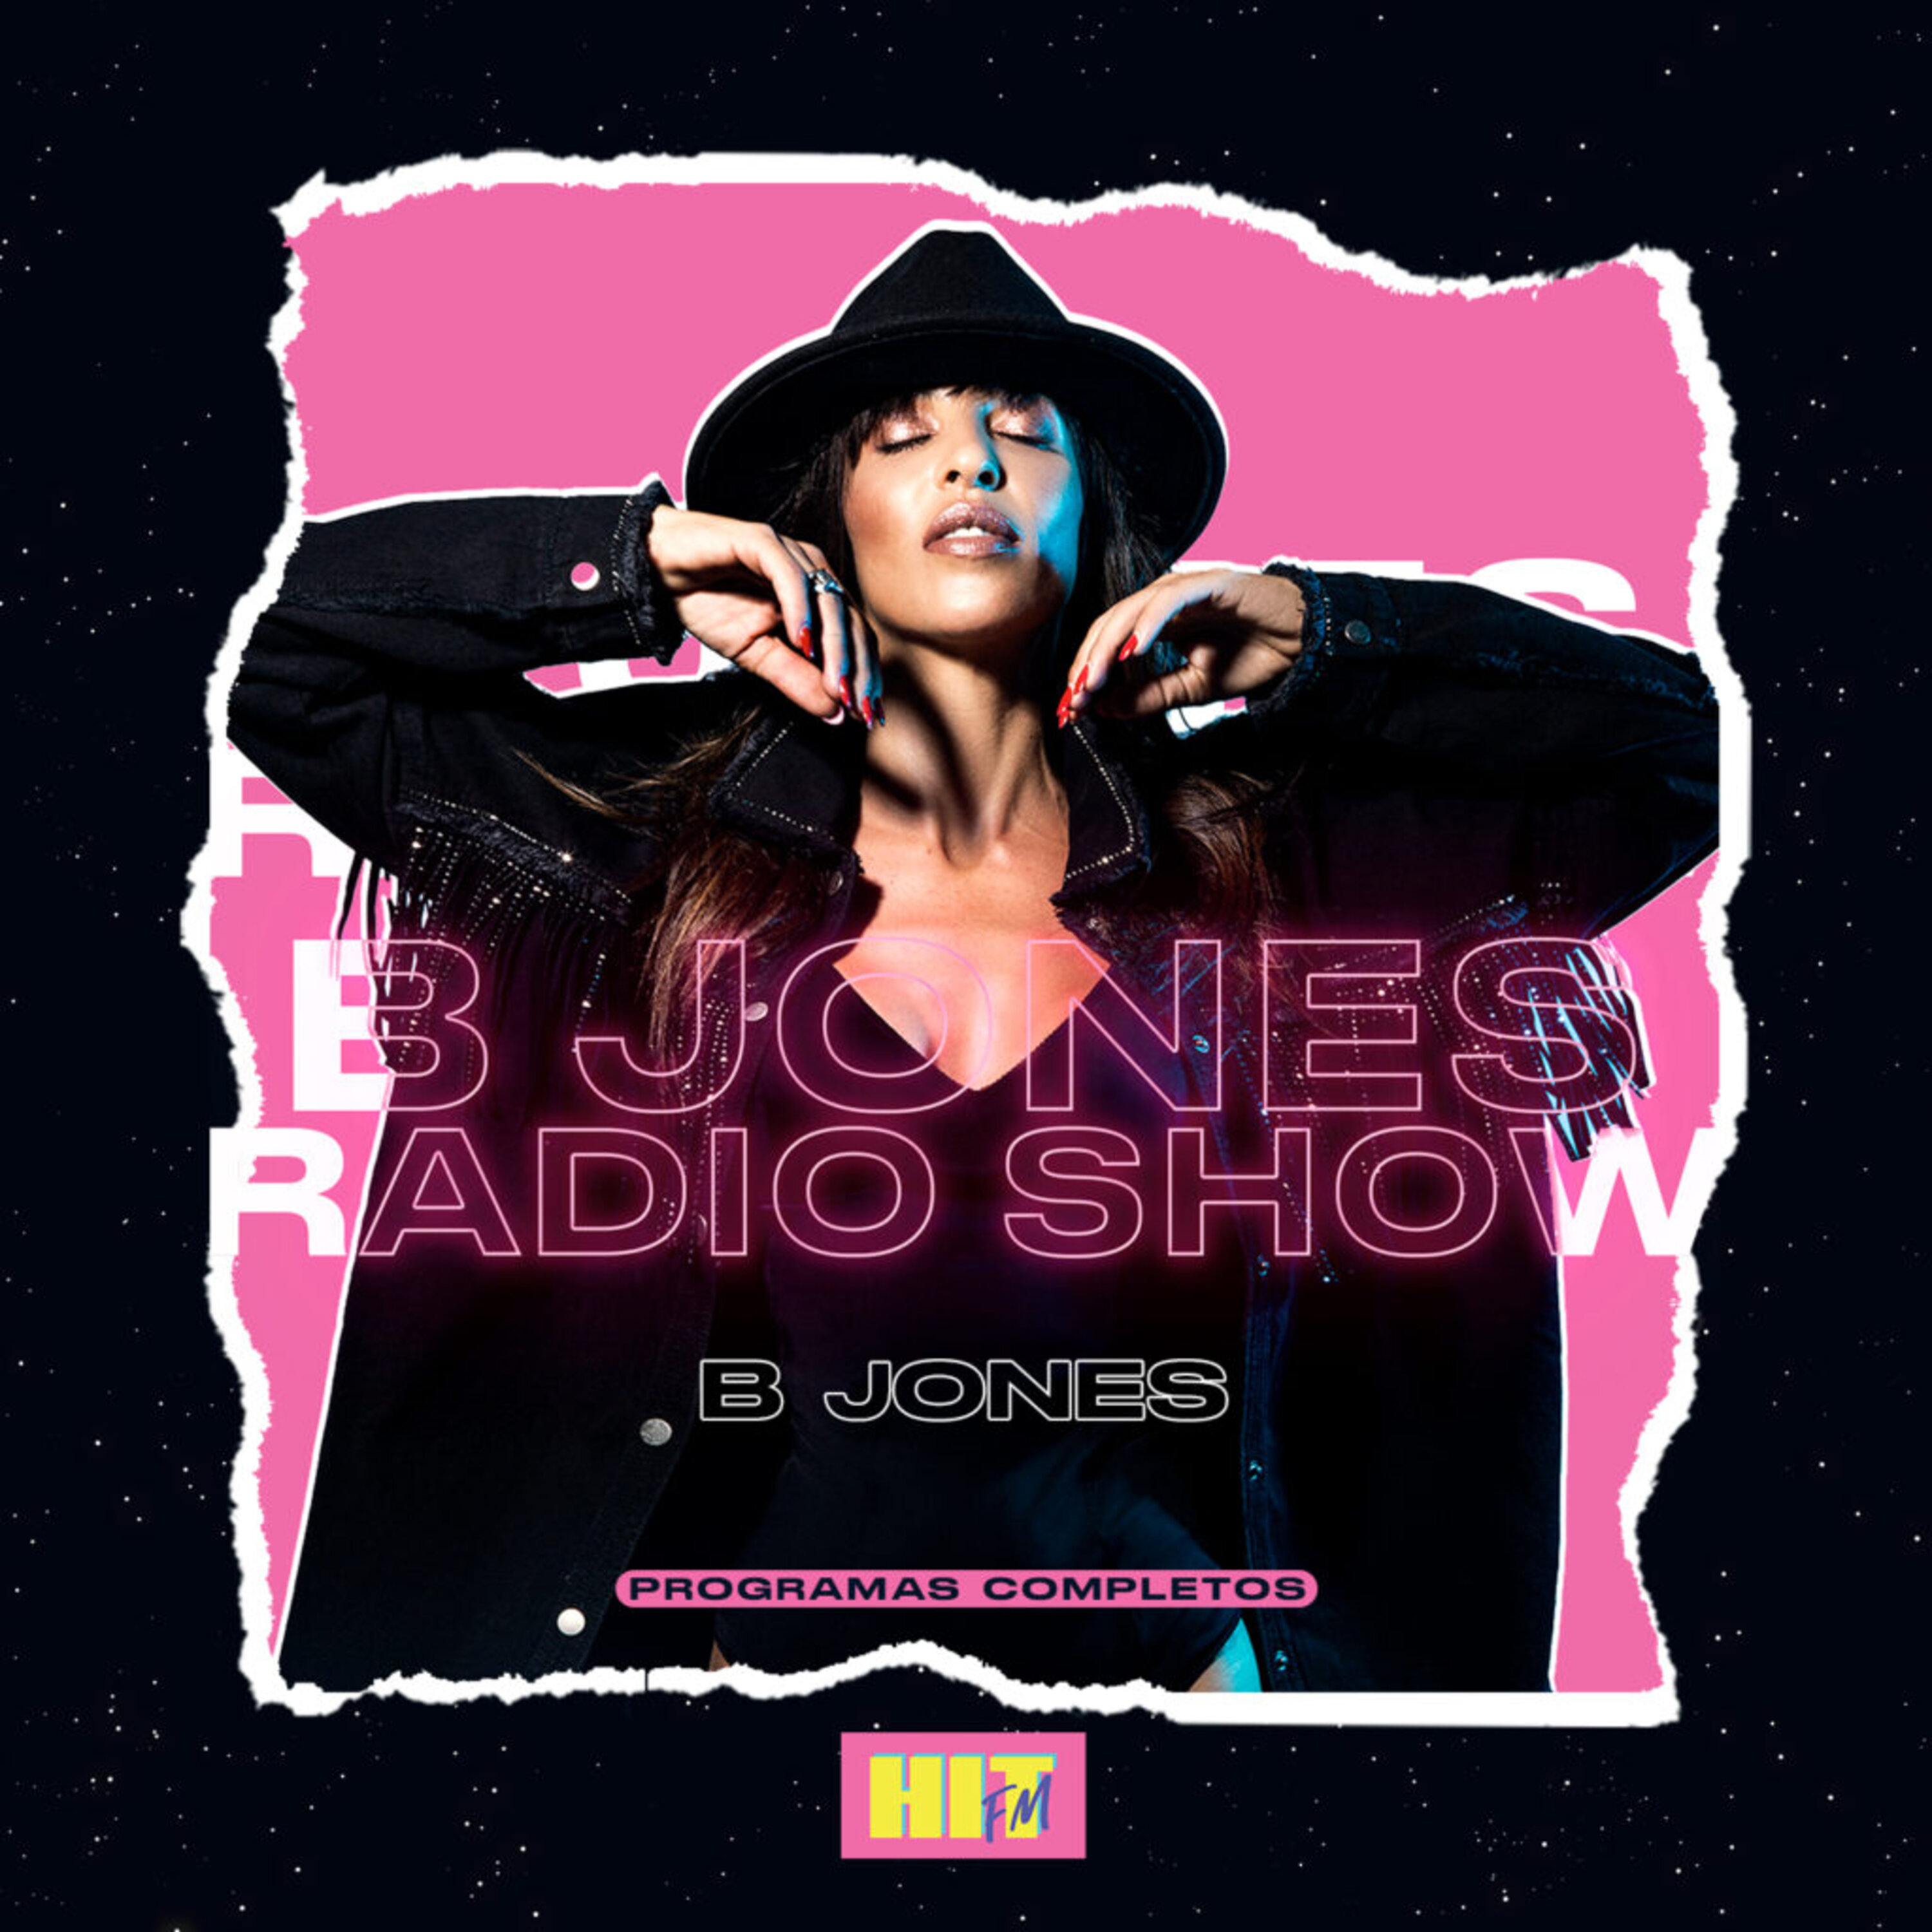 B JONES RADIO SHOW